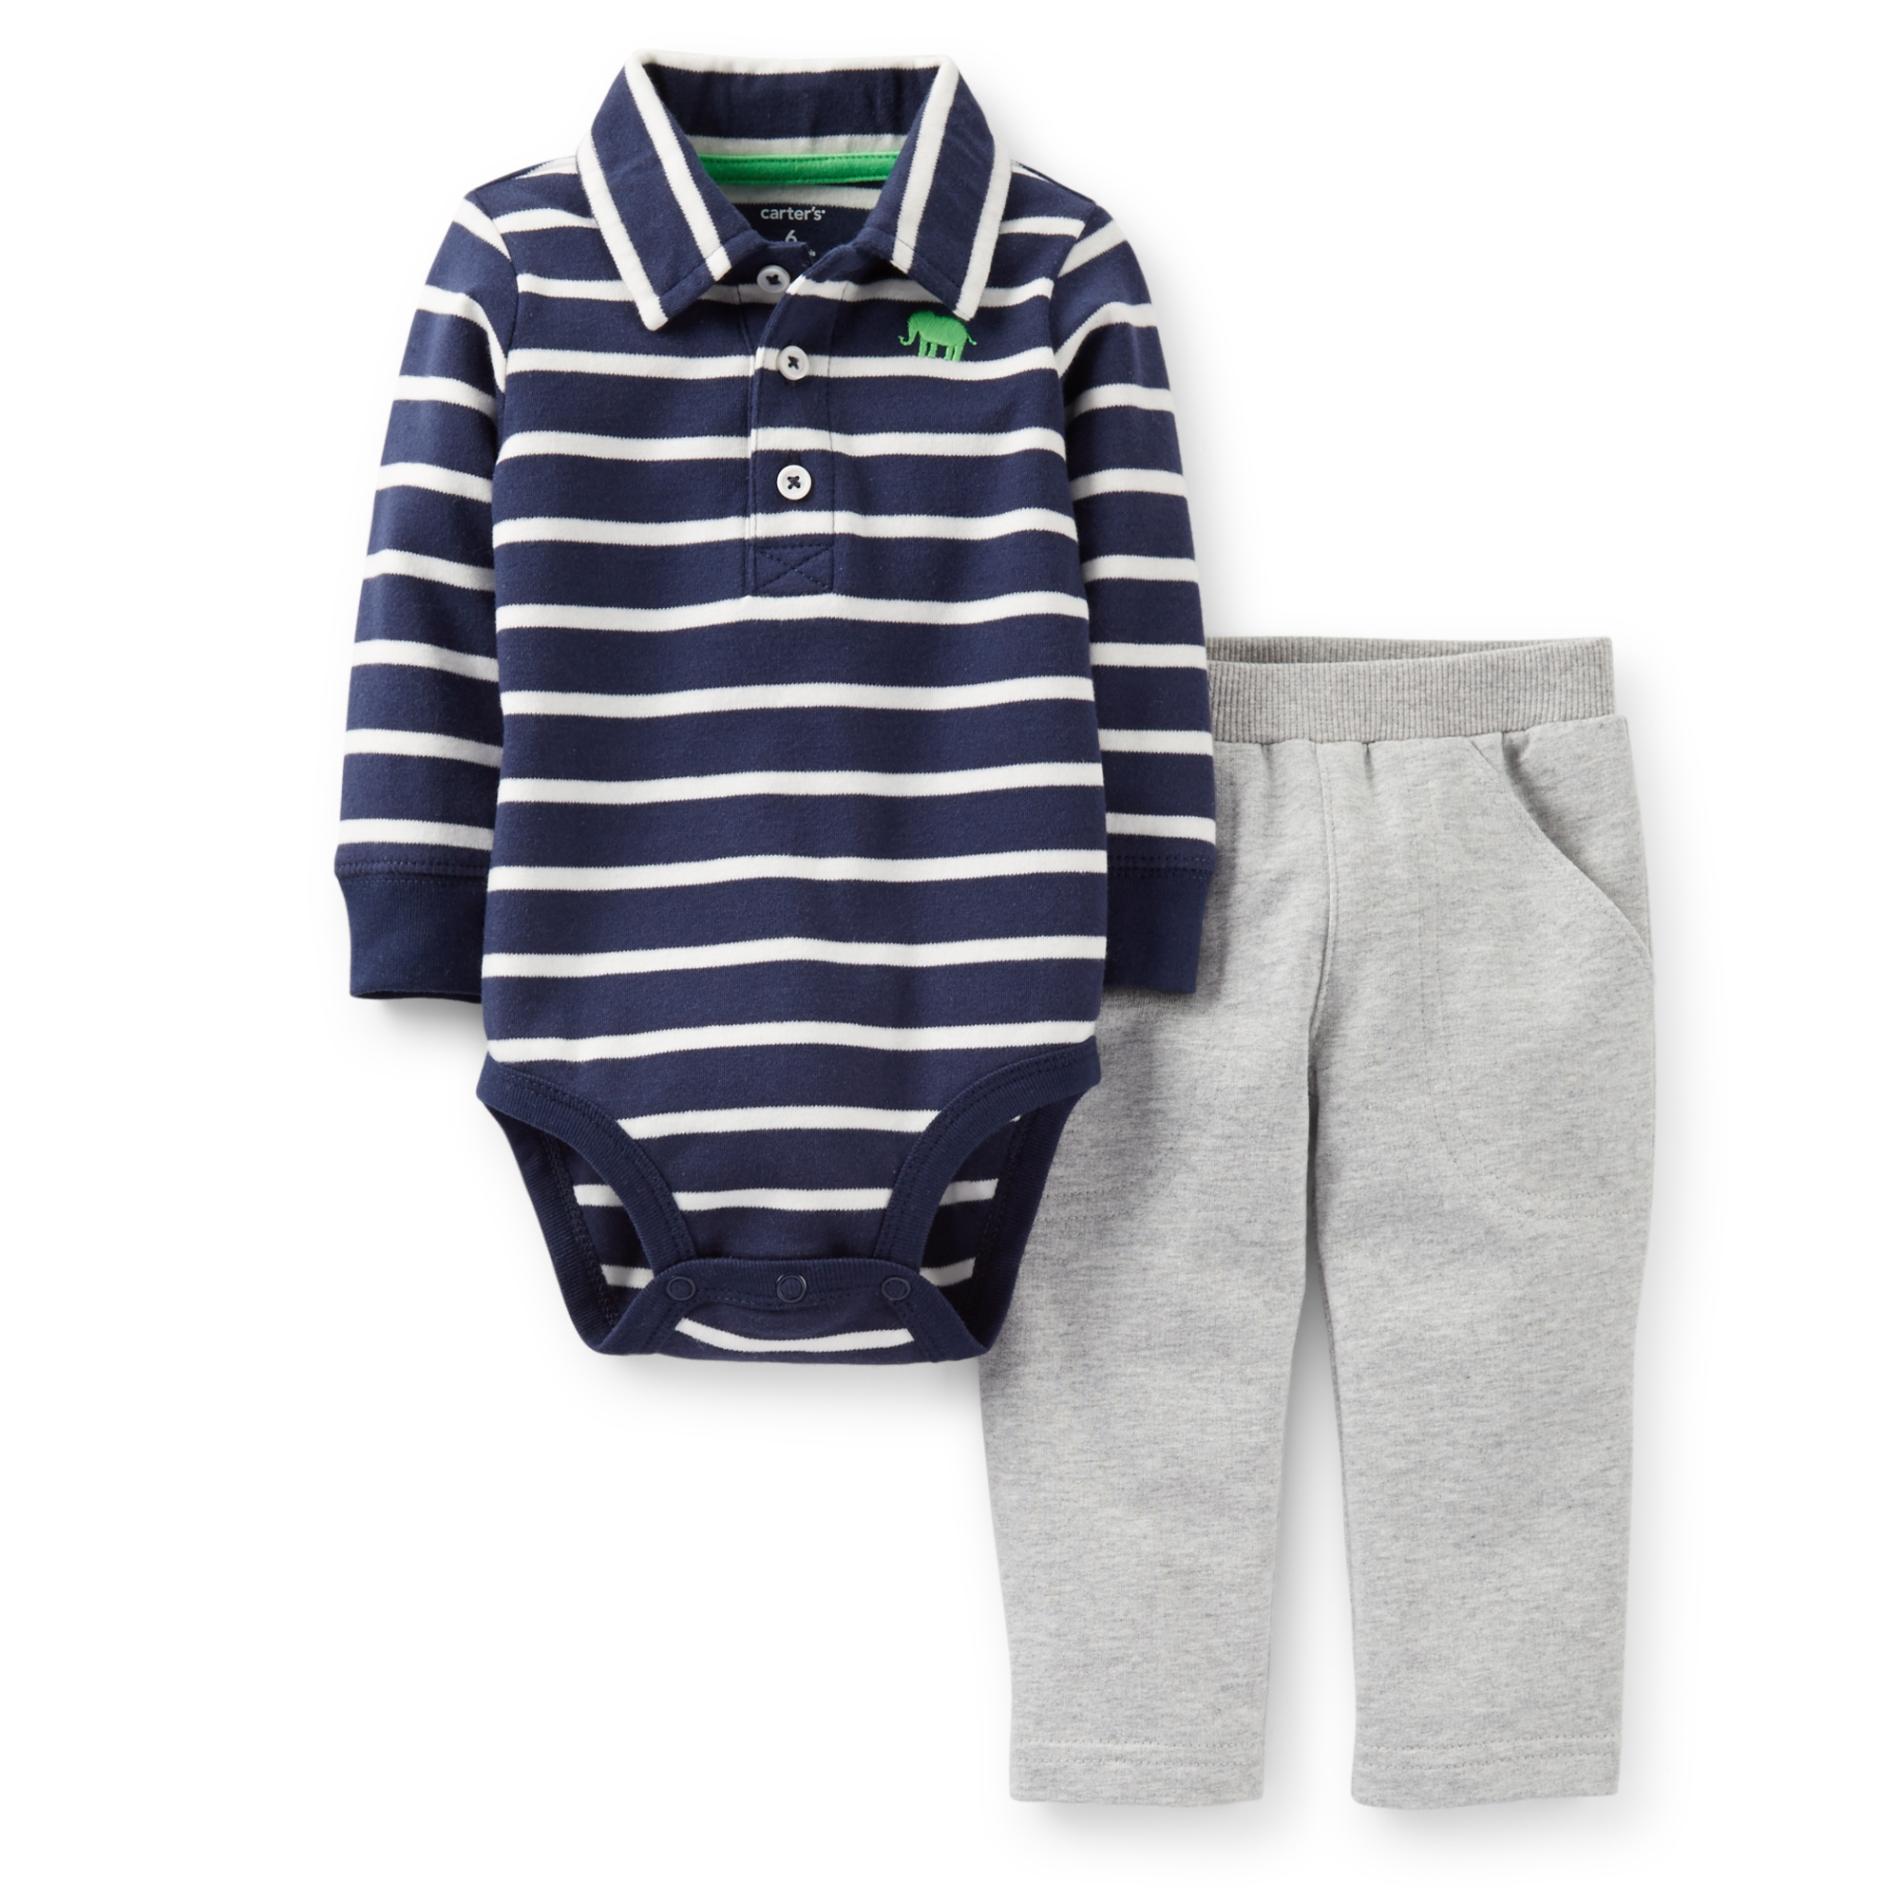 Carter's Newborn & Infant Boy's Bodysuit & Sweatpants - Striped